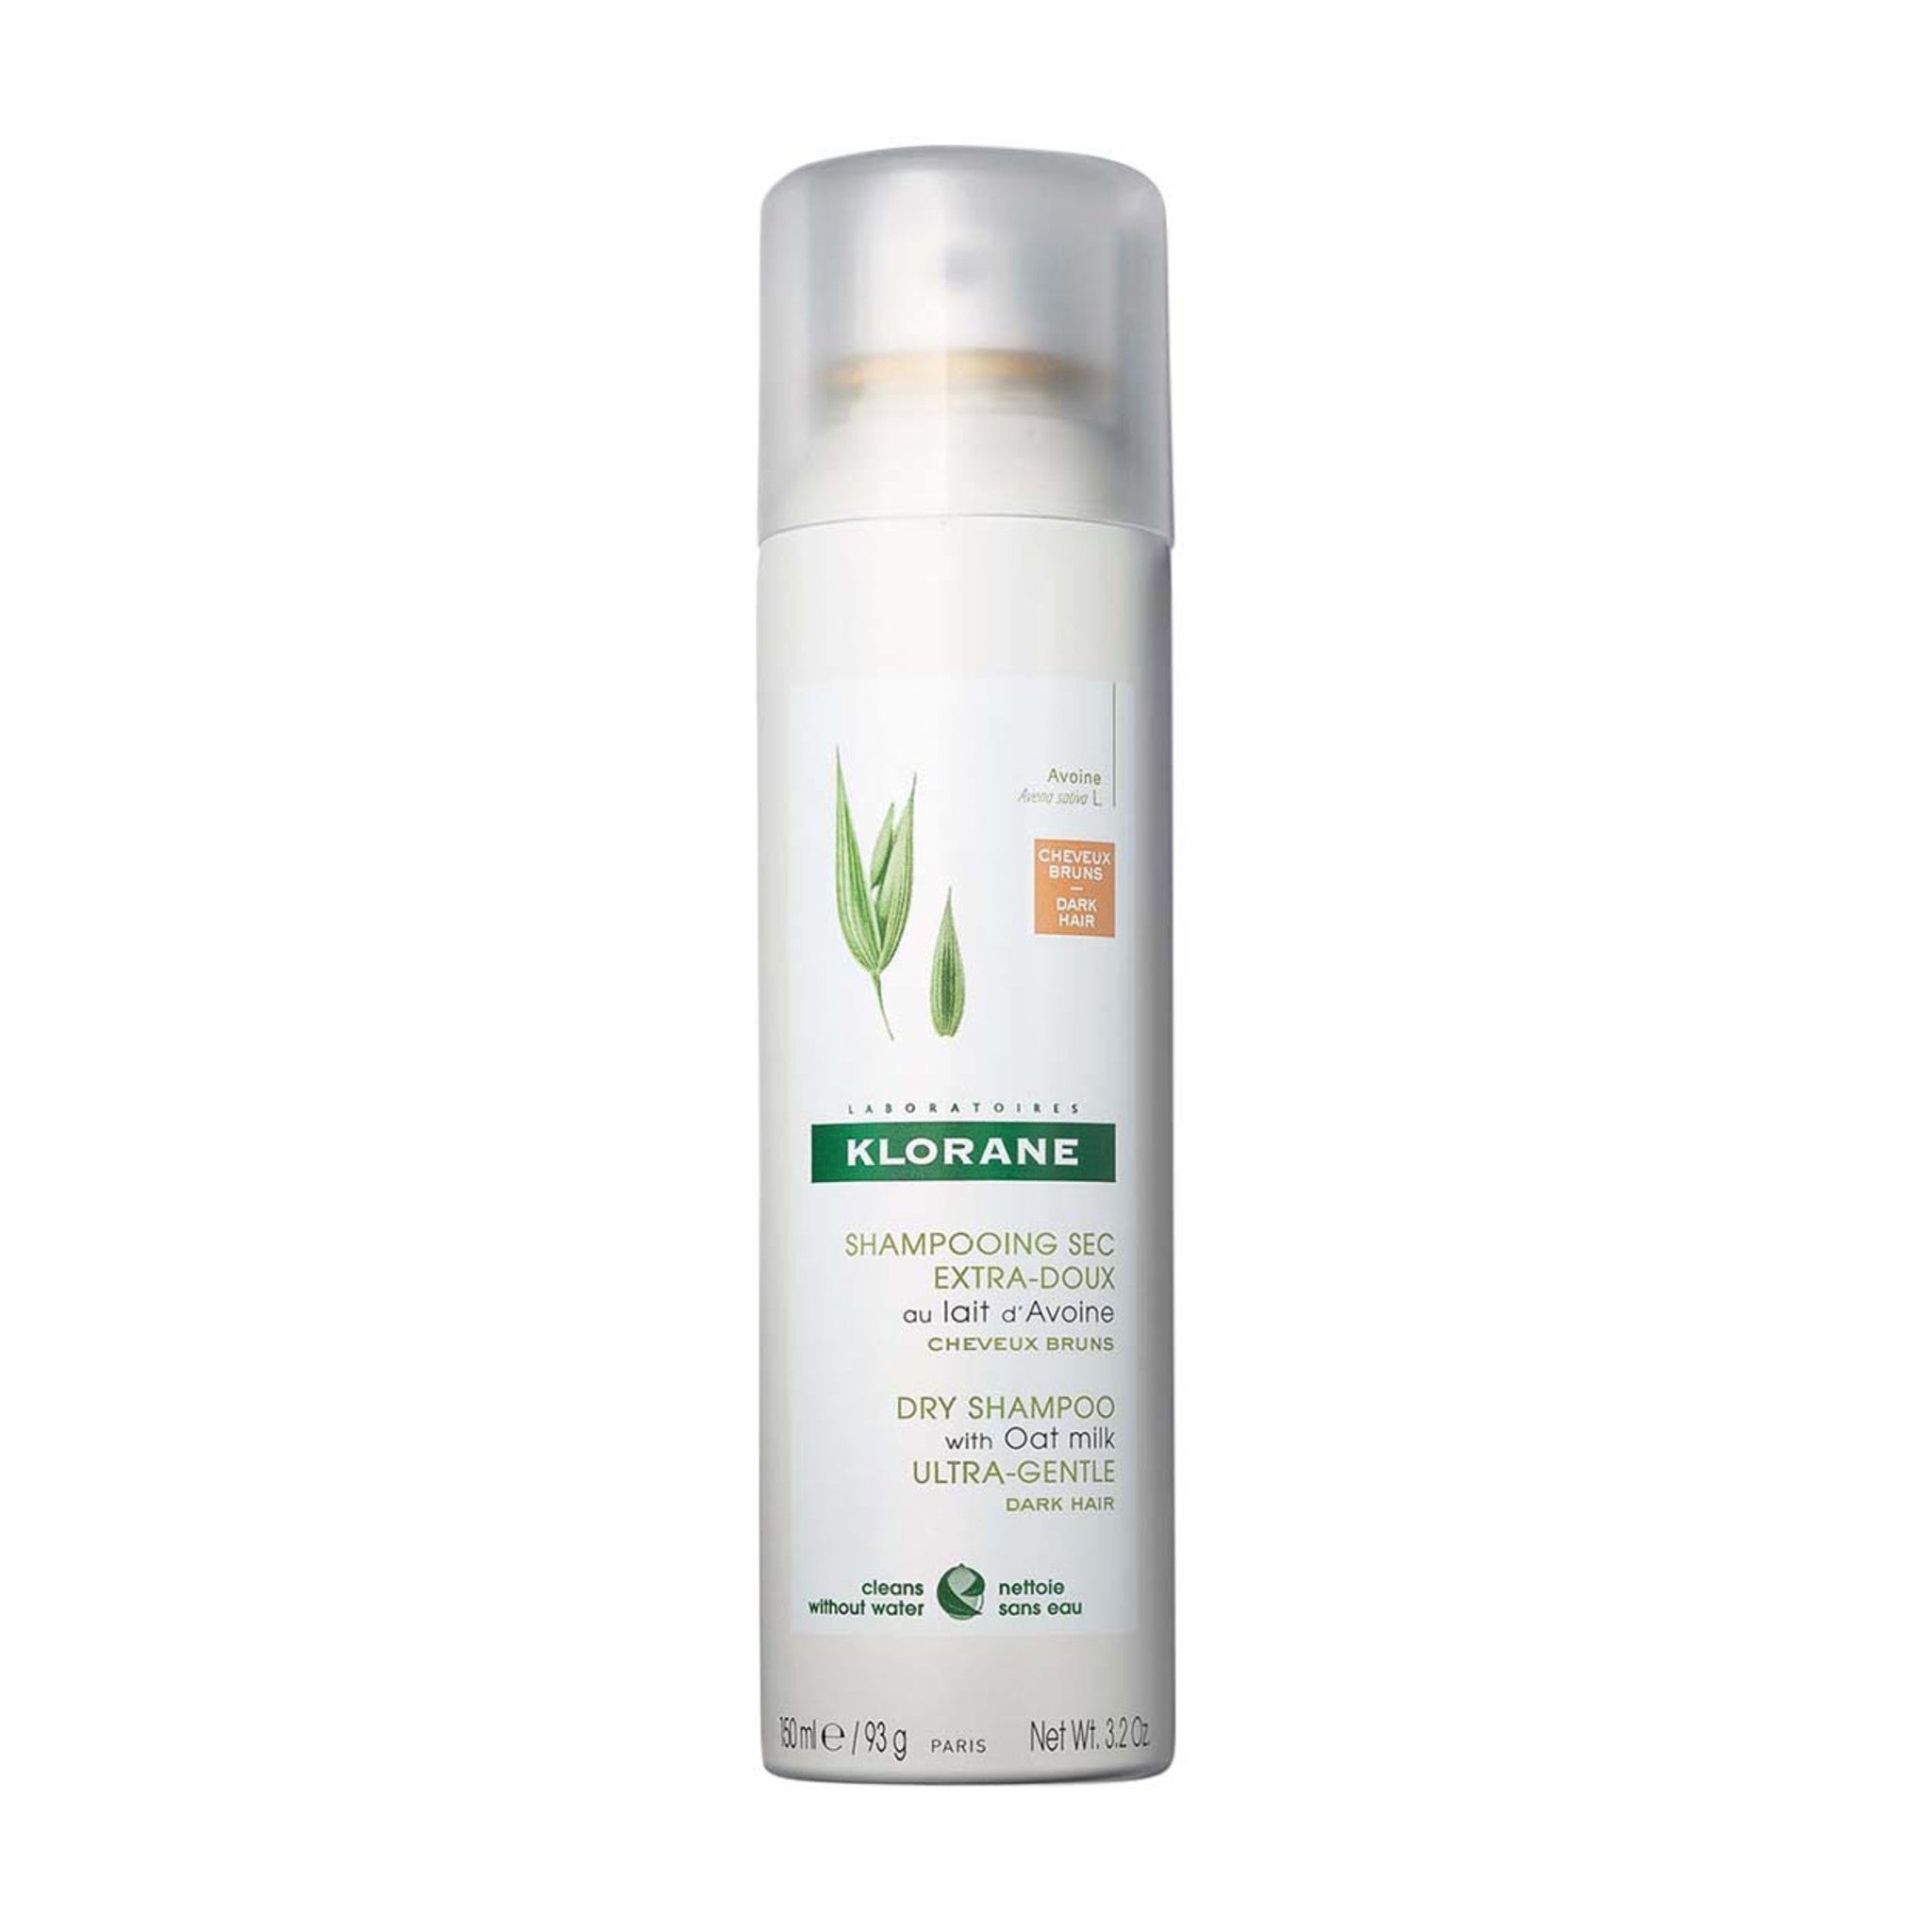 Klorane Dry Shampoo With Oat Milk for Dark Hair Size variant: 3.2 oz main image.